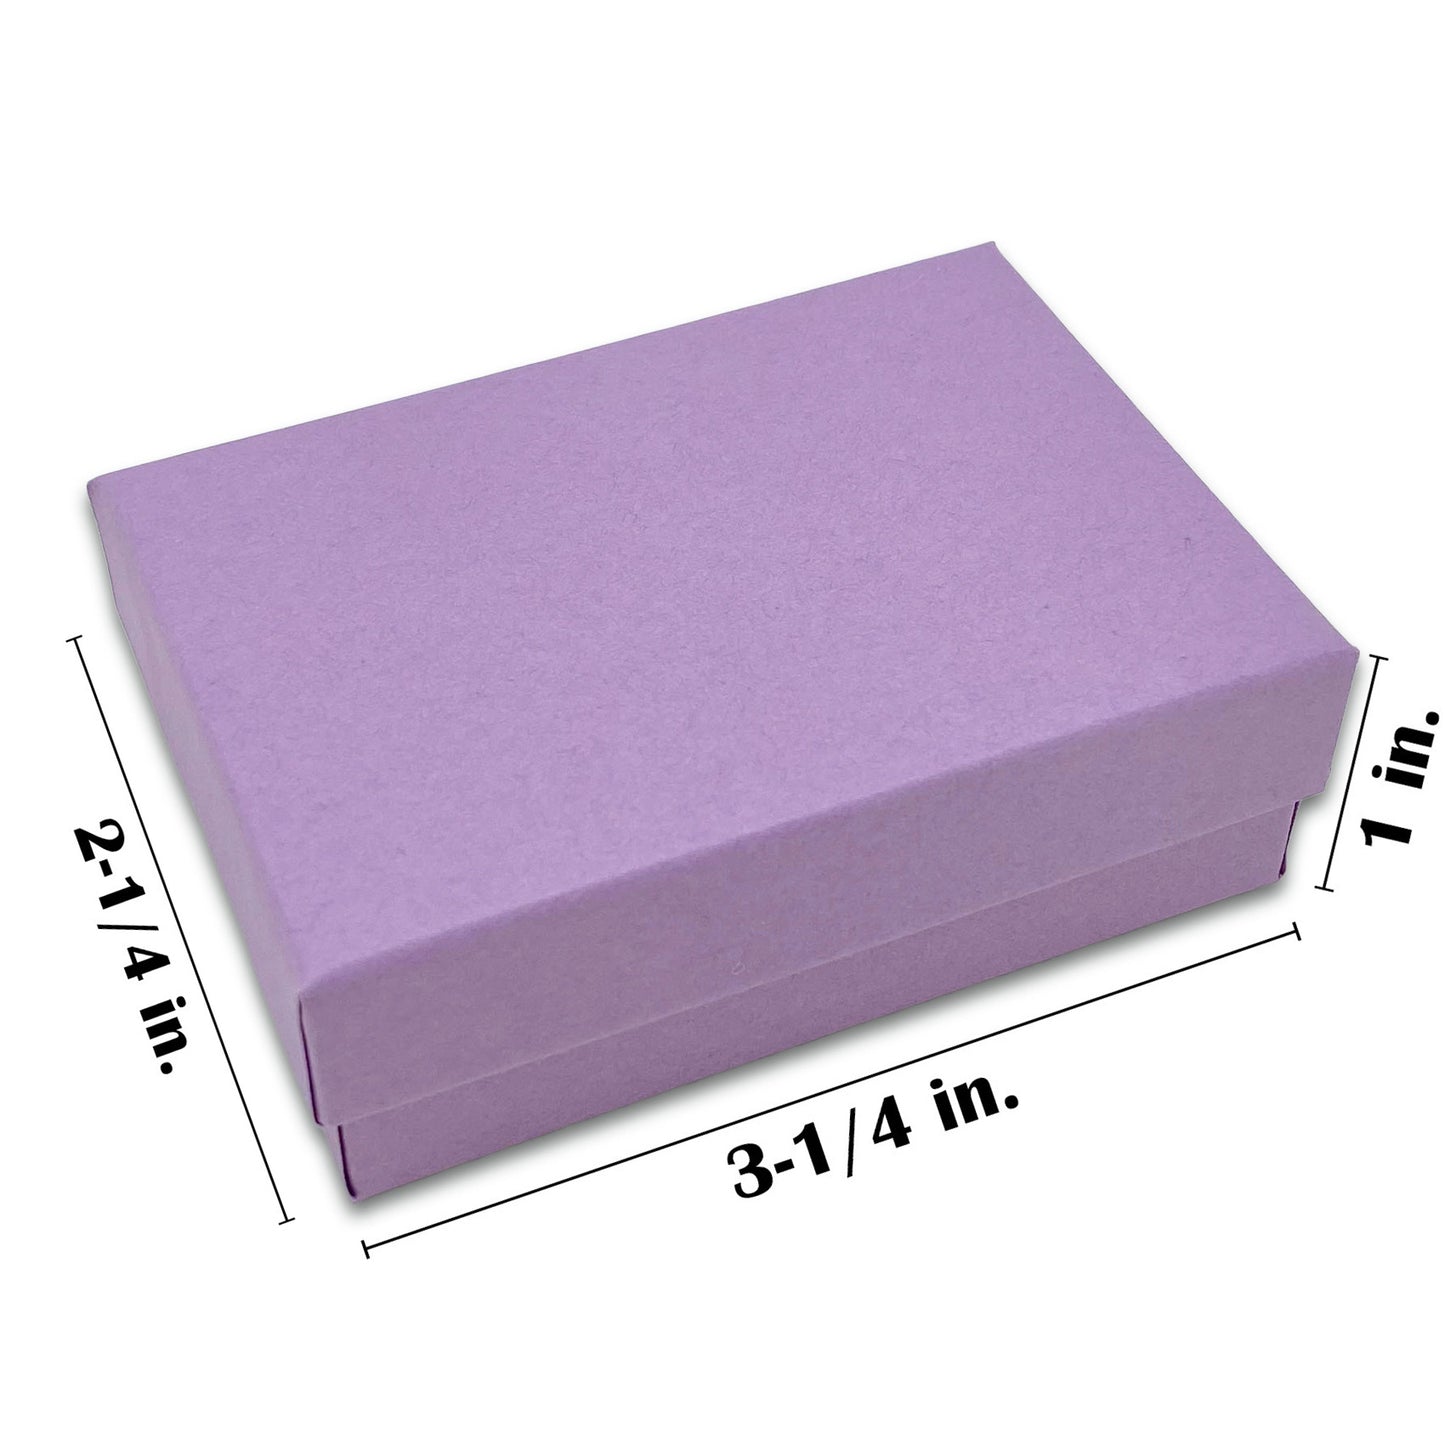 3 1/4" x 2 1/4" x 1" Matte Purple Cotton Filled Paper Box